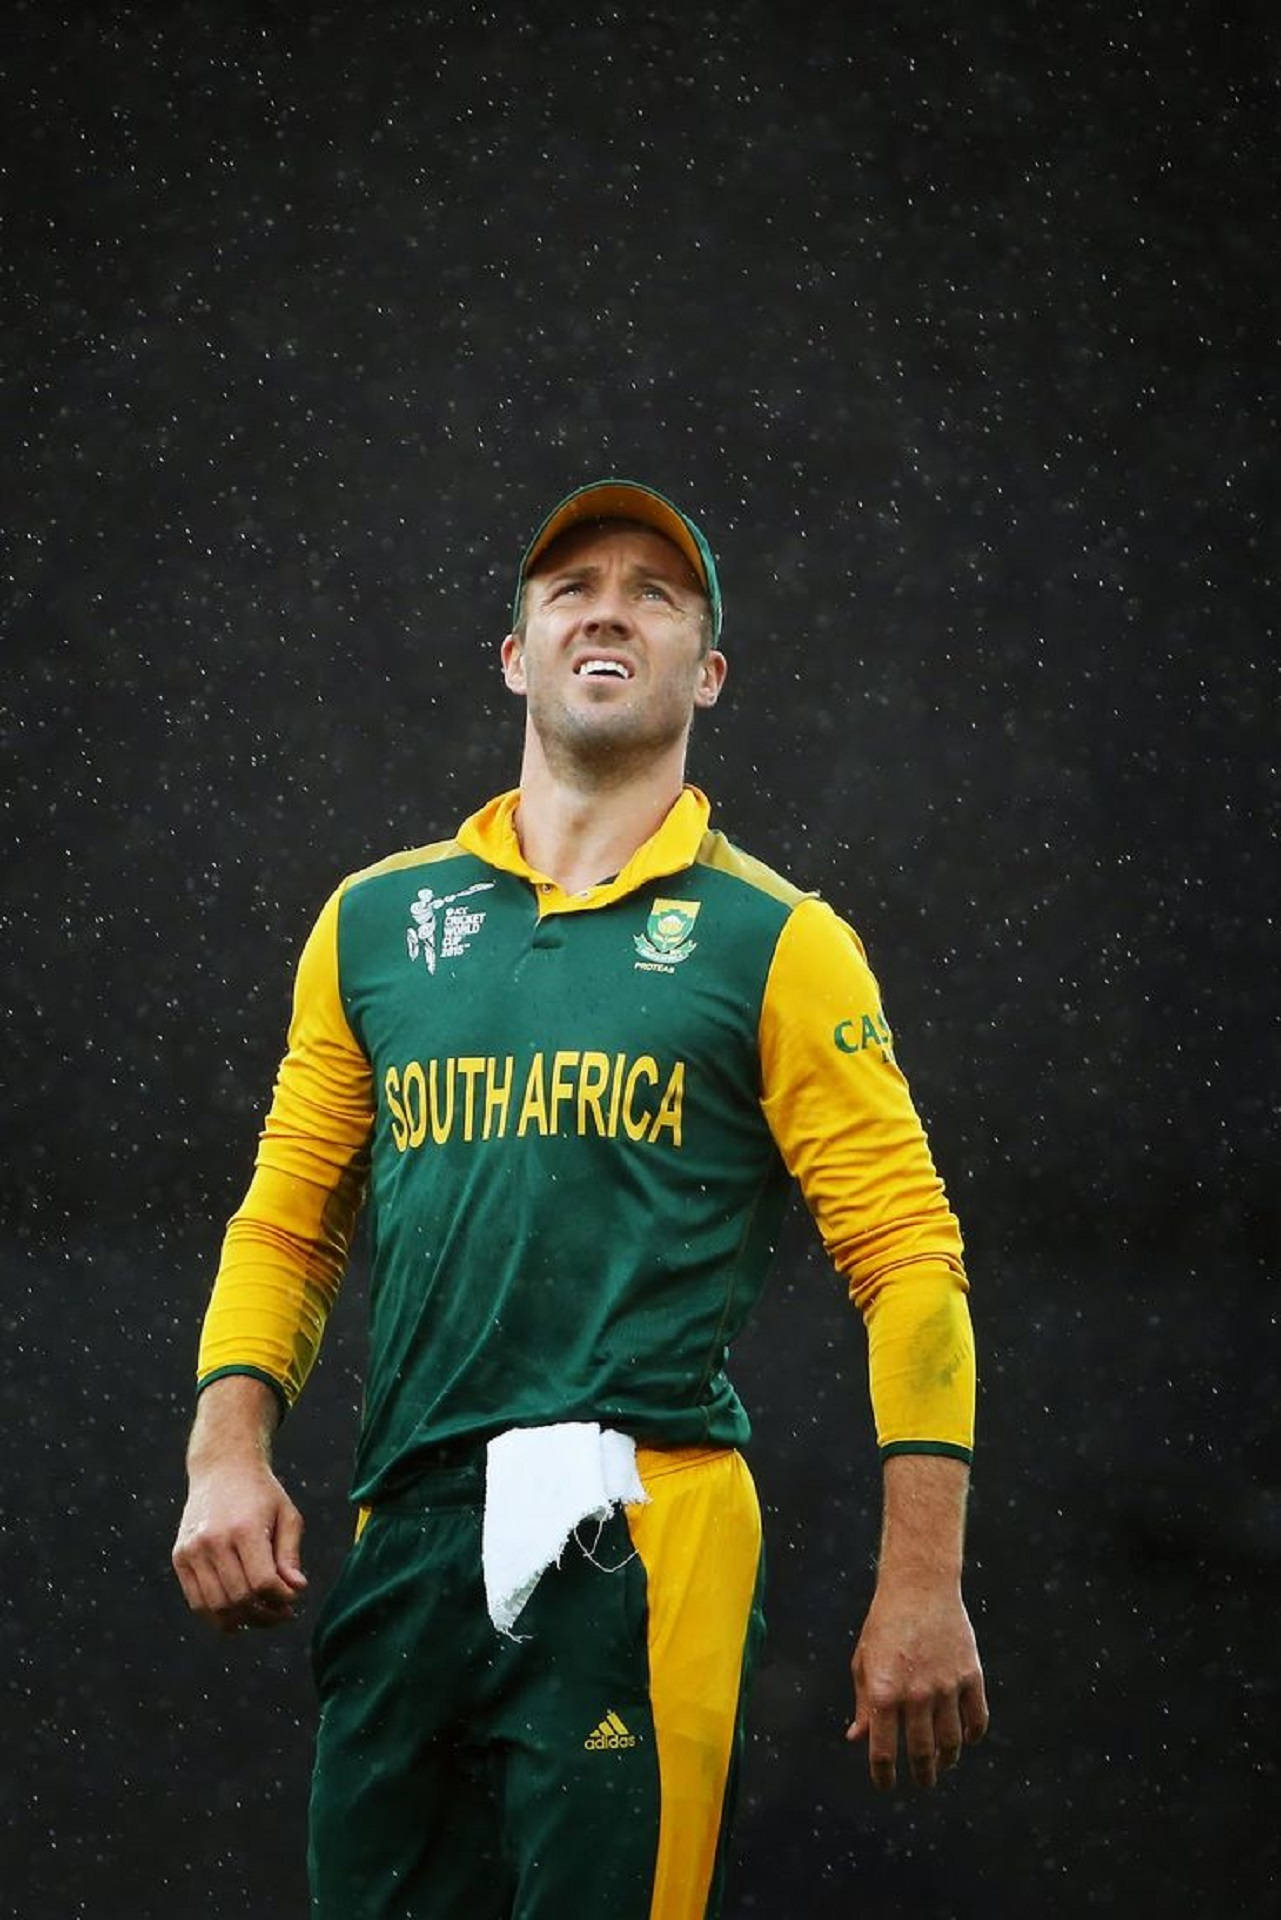 Download South Africa Cricket Captain Ab De Villiers Wallpaper | Wallpapers .com